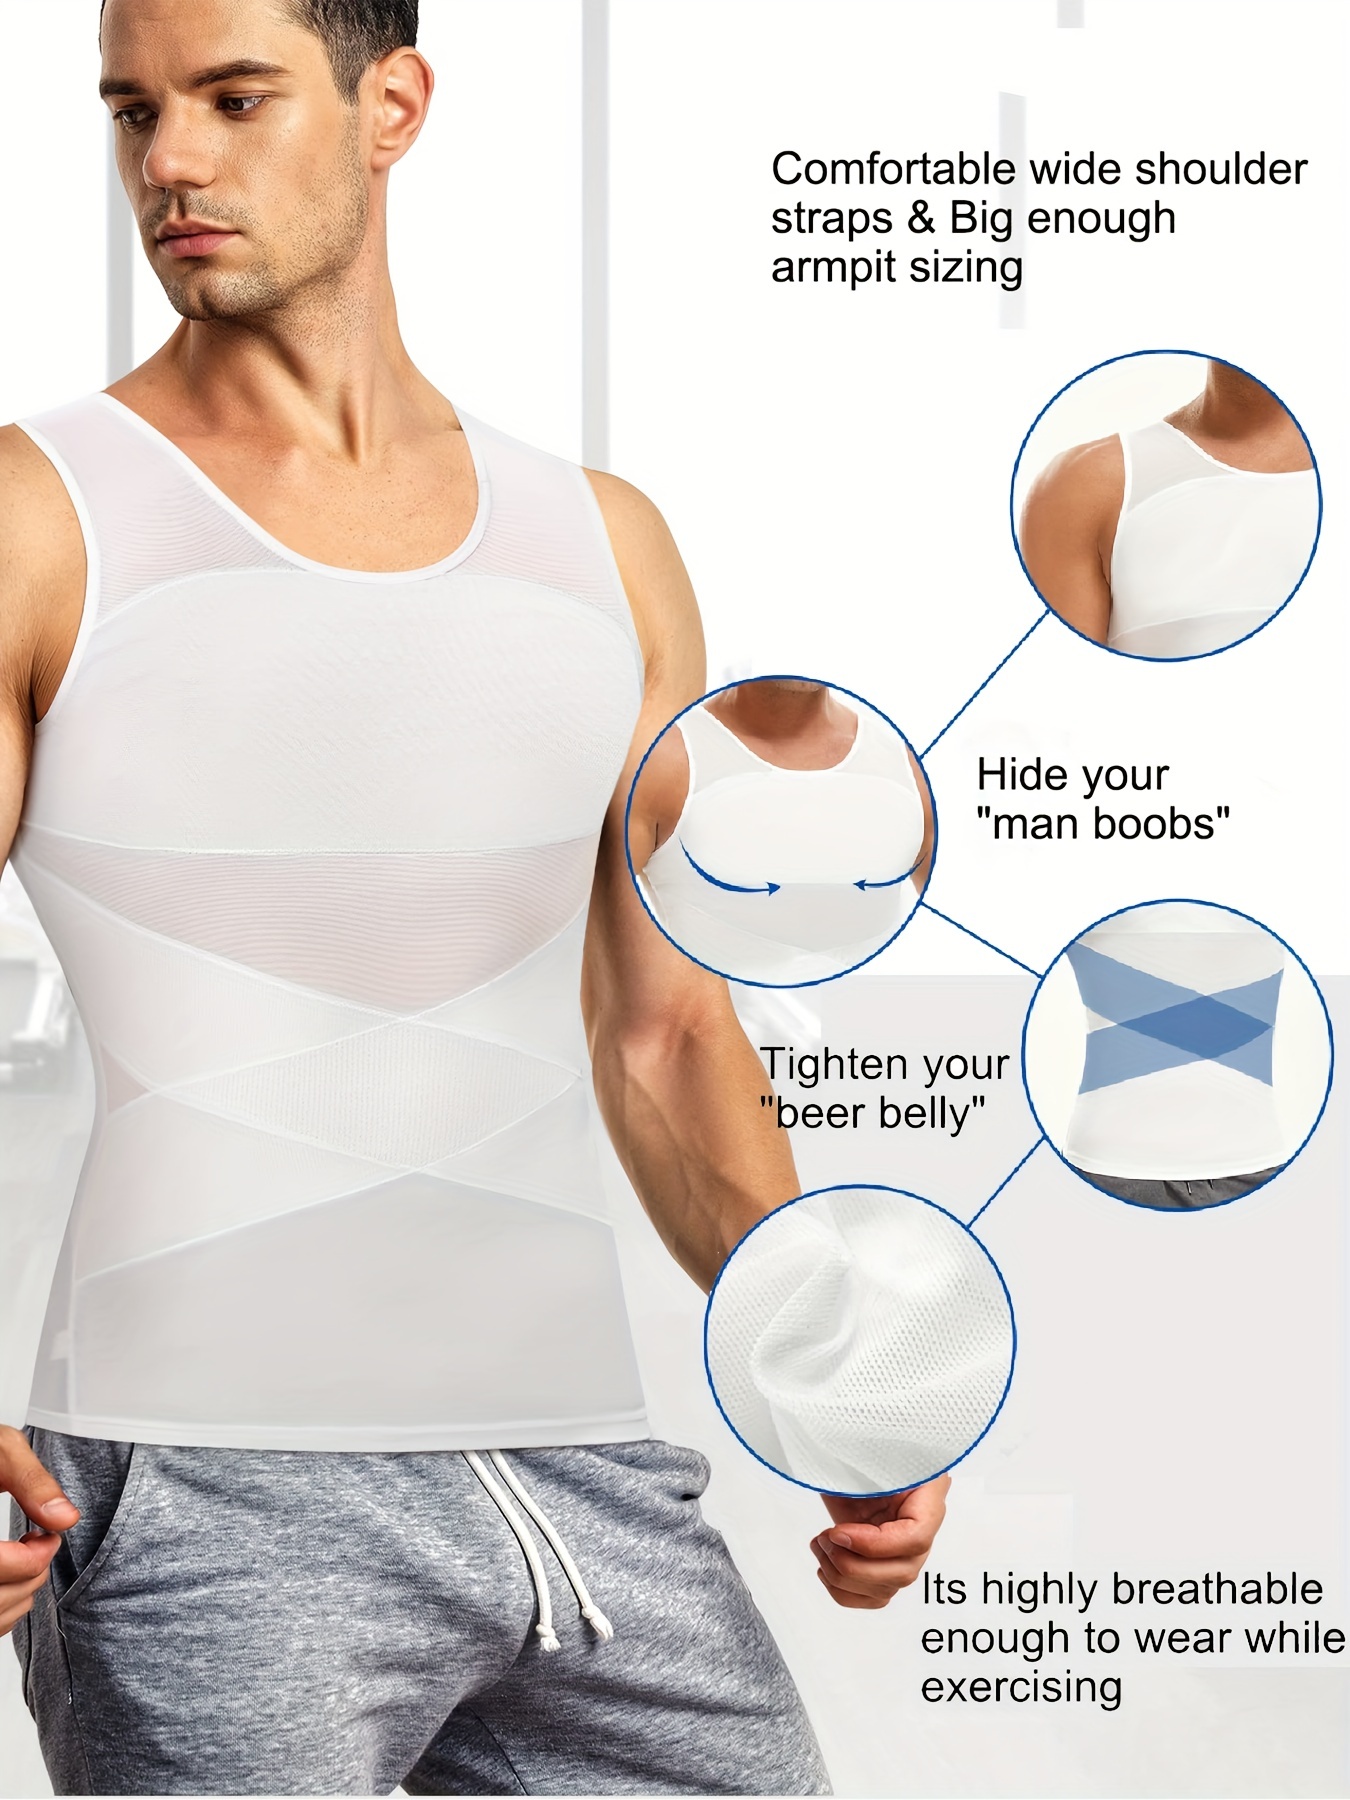 Men Vest Tank Top Slimming Belly T-Shirt Body Shaper Compression Shapewear  Black